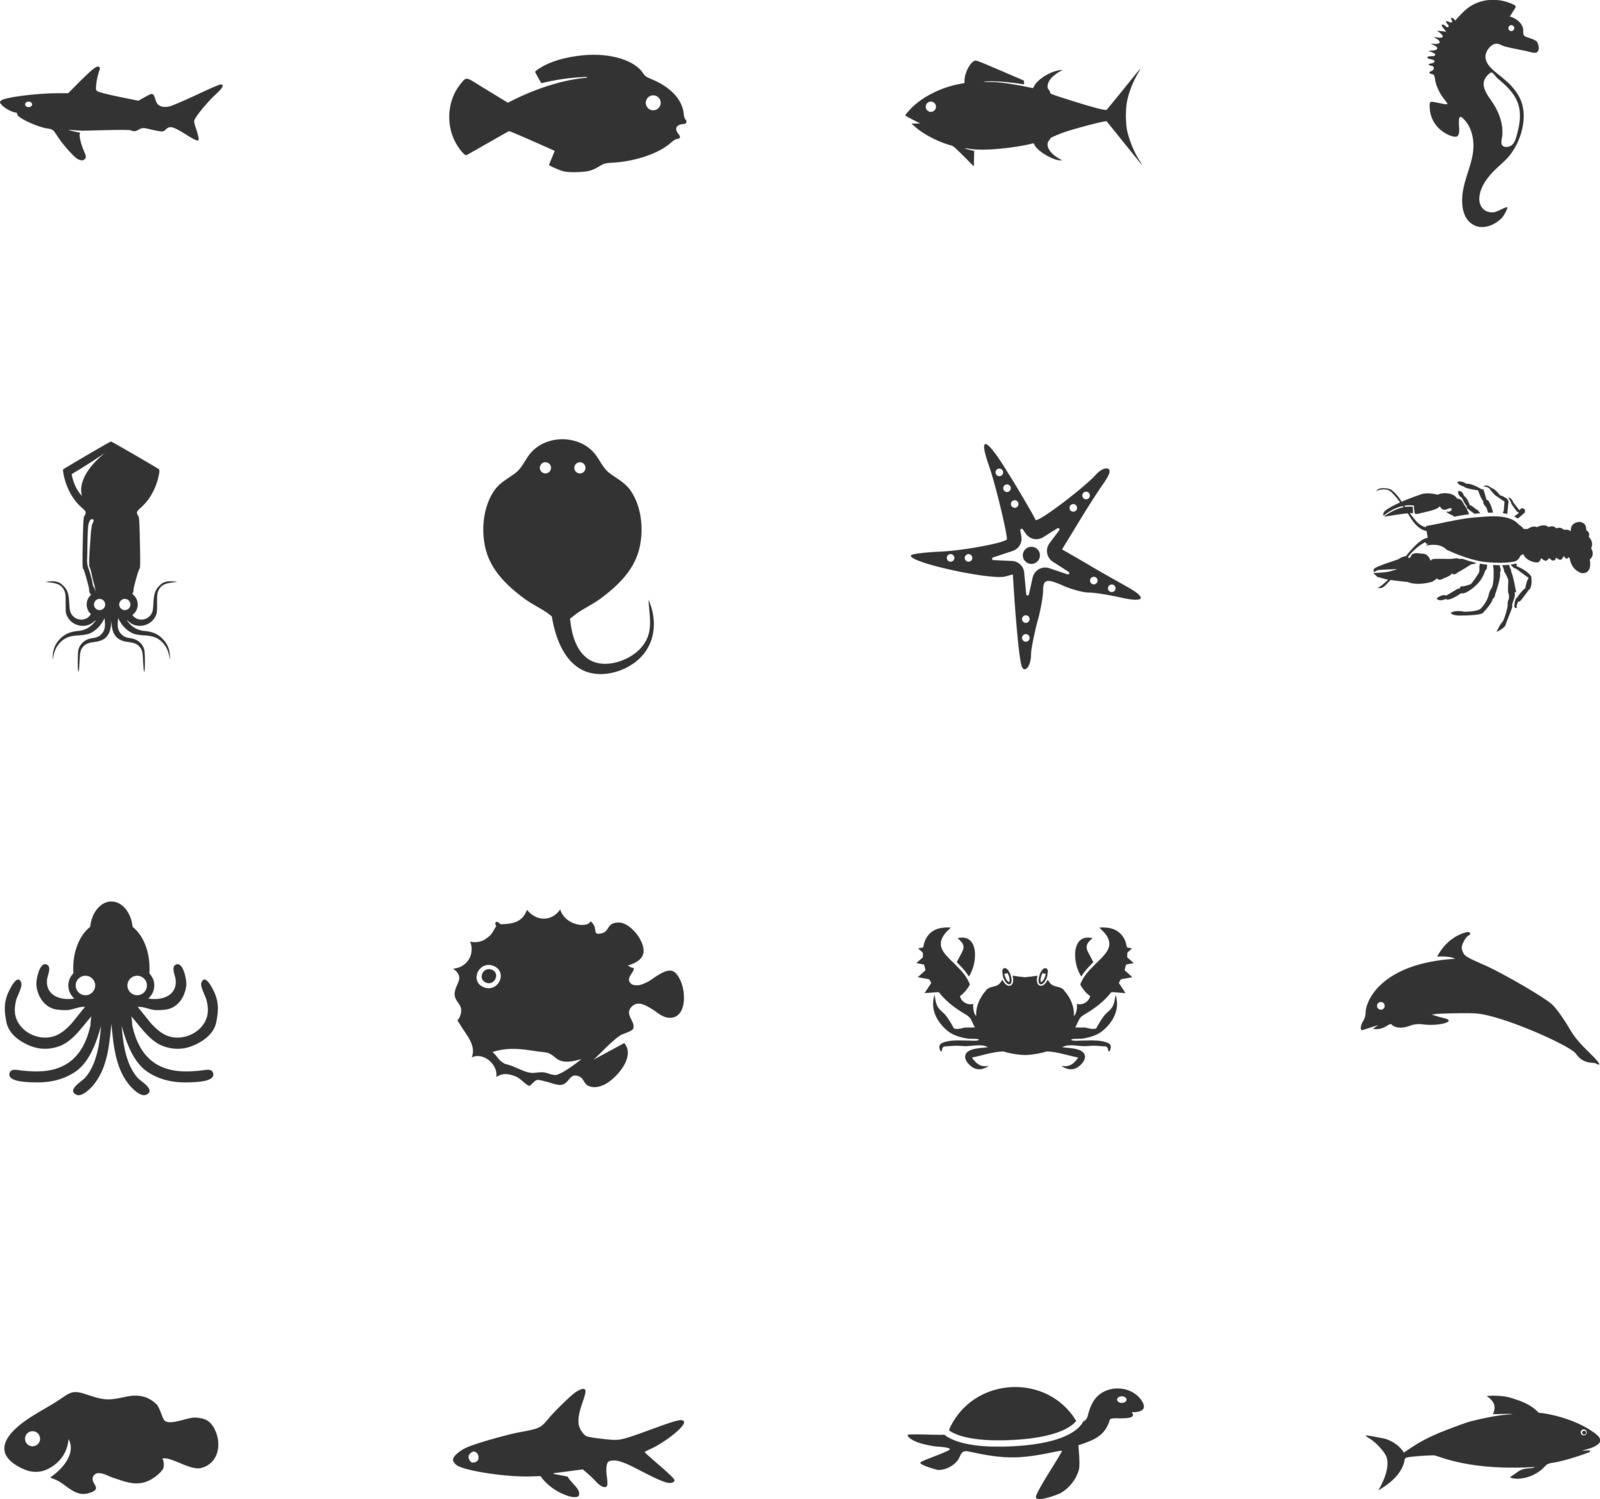 Fish marine animals icons set by ayax